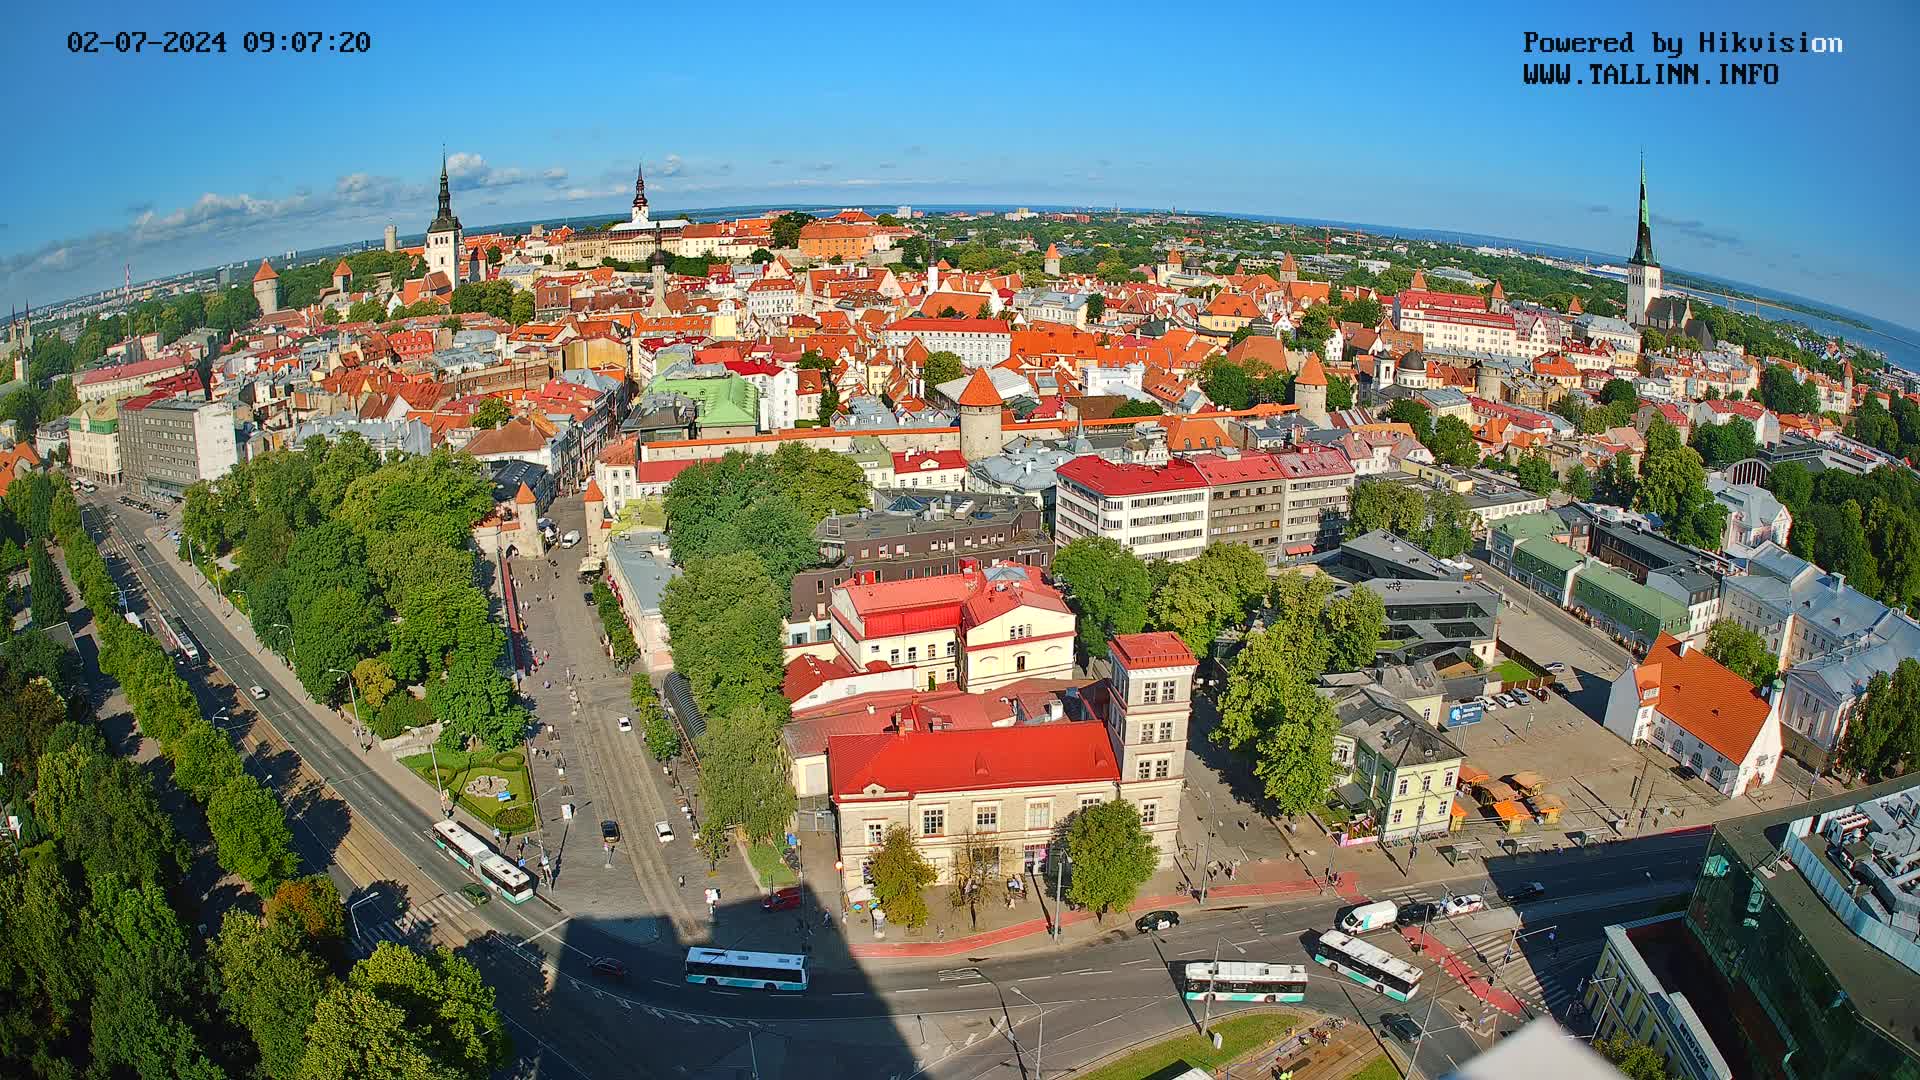 Tallinn Ven. 09:34